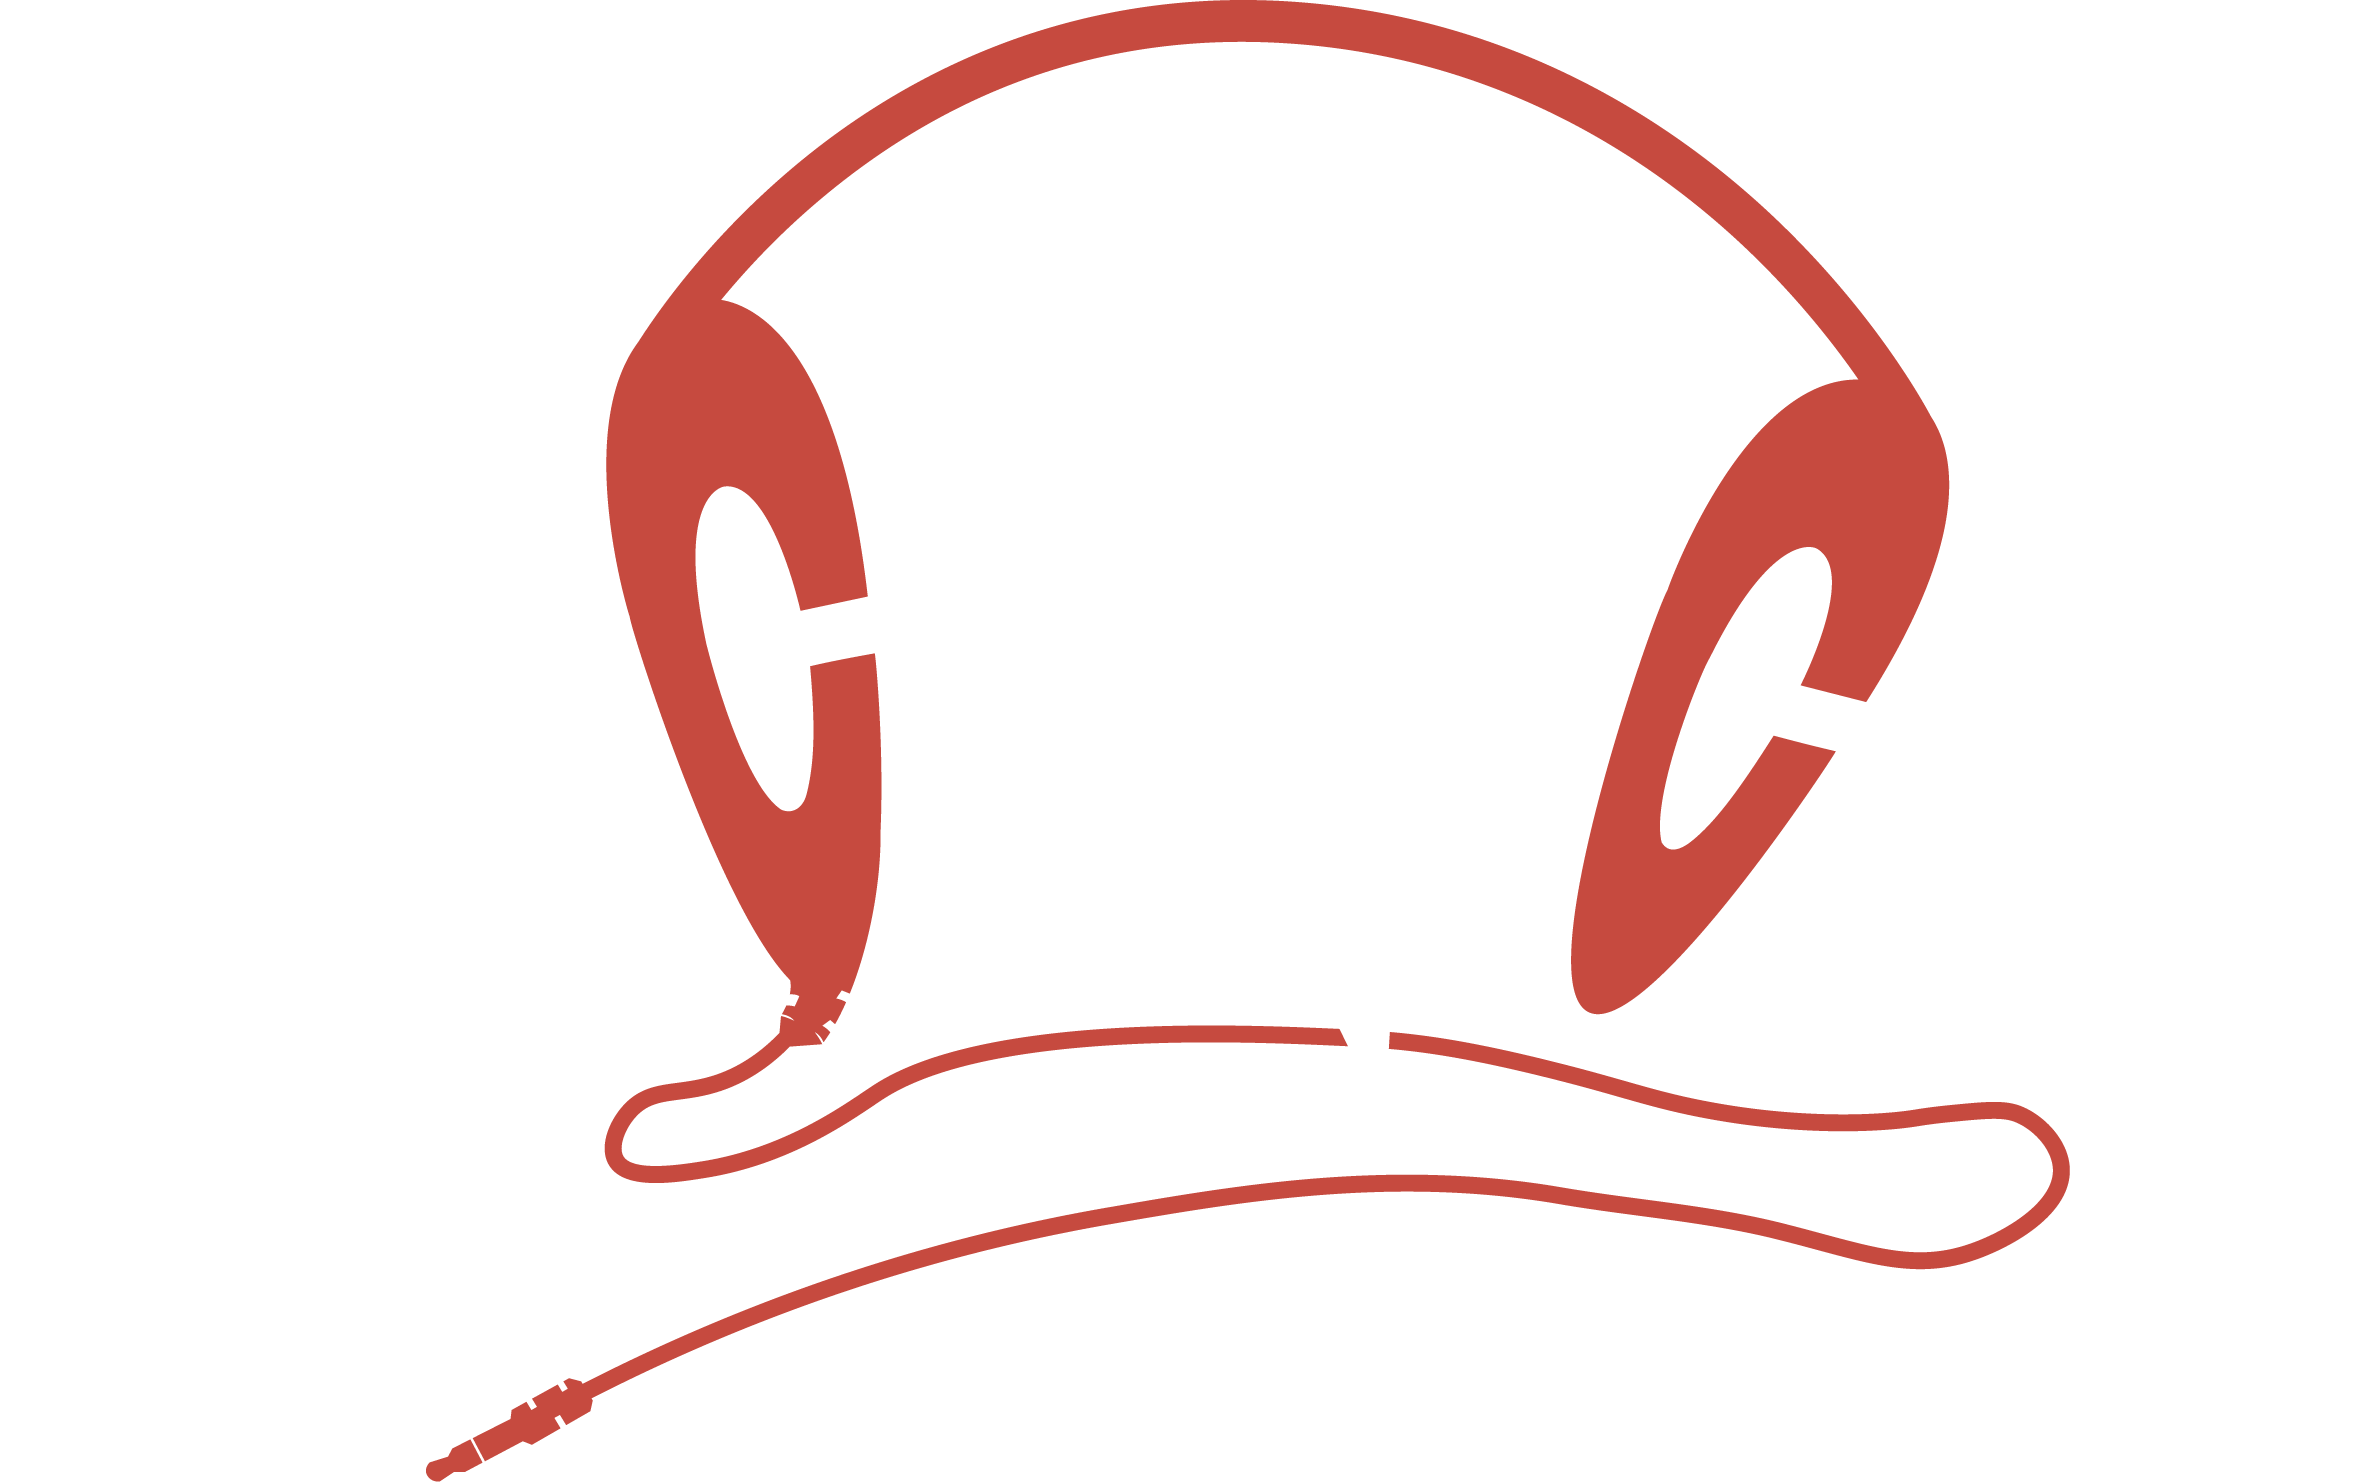 Techneck